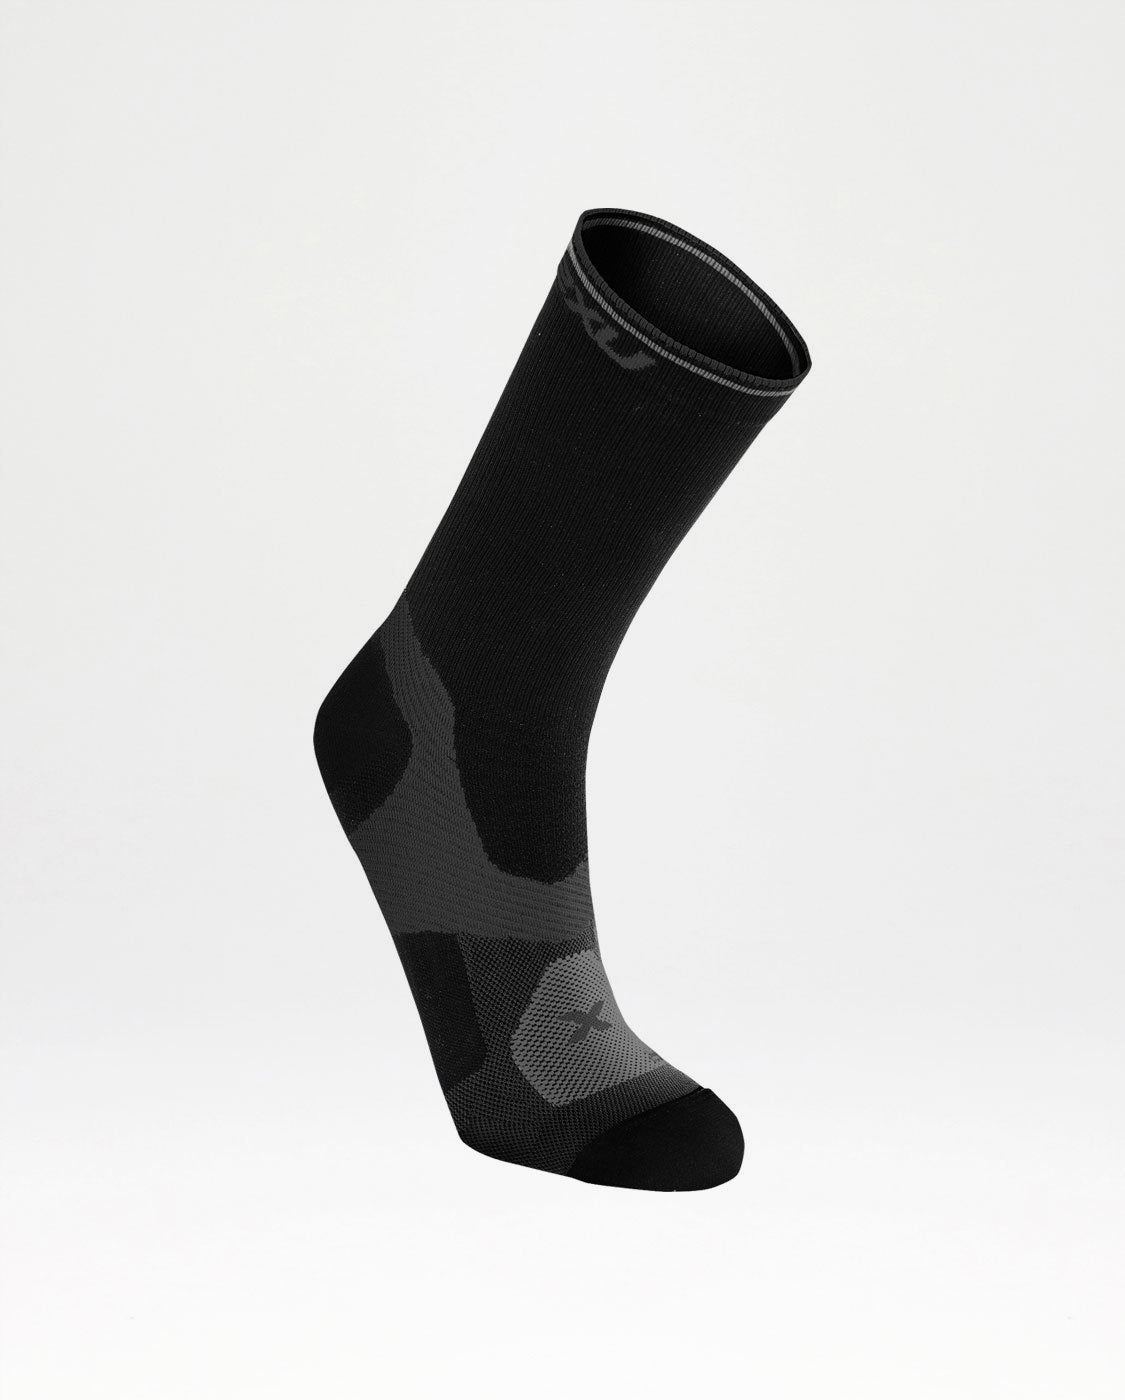 2Xu Cycle Vectr sock